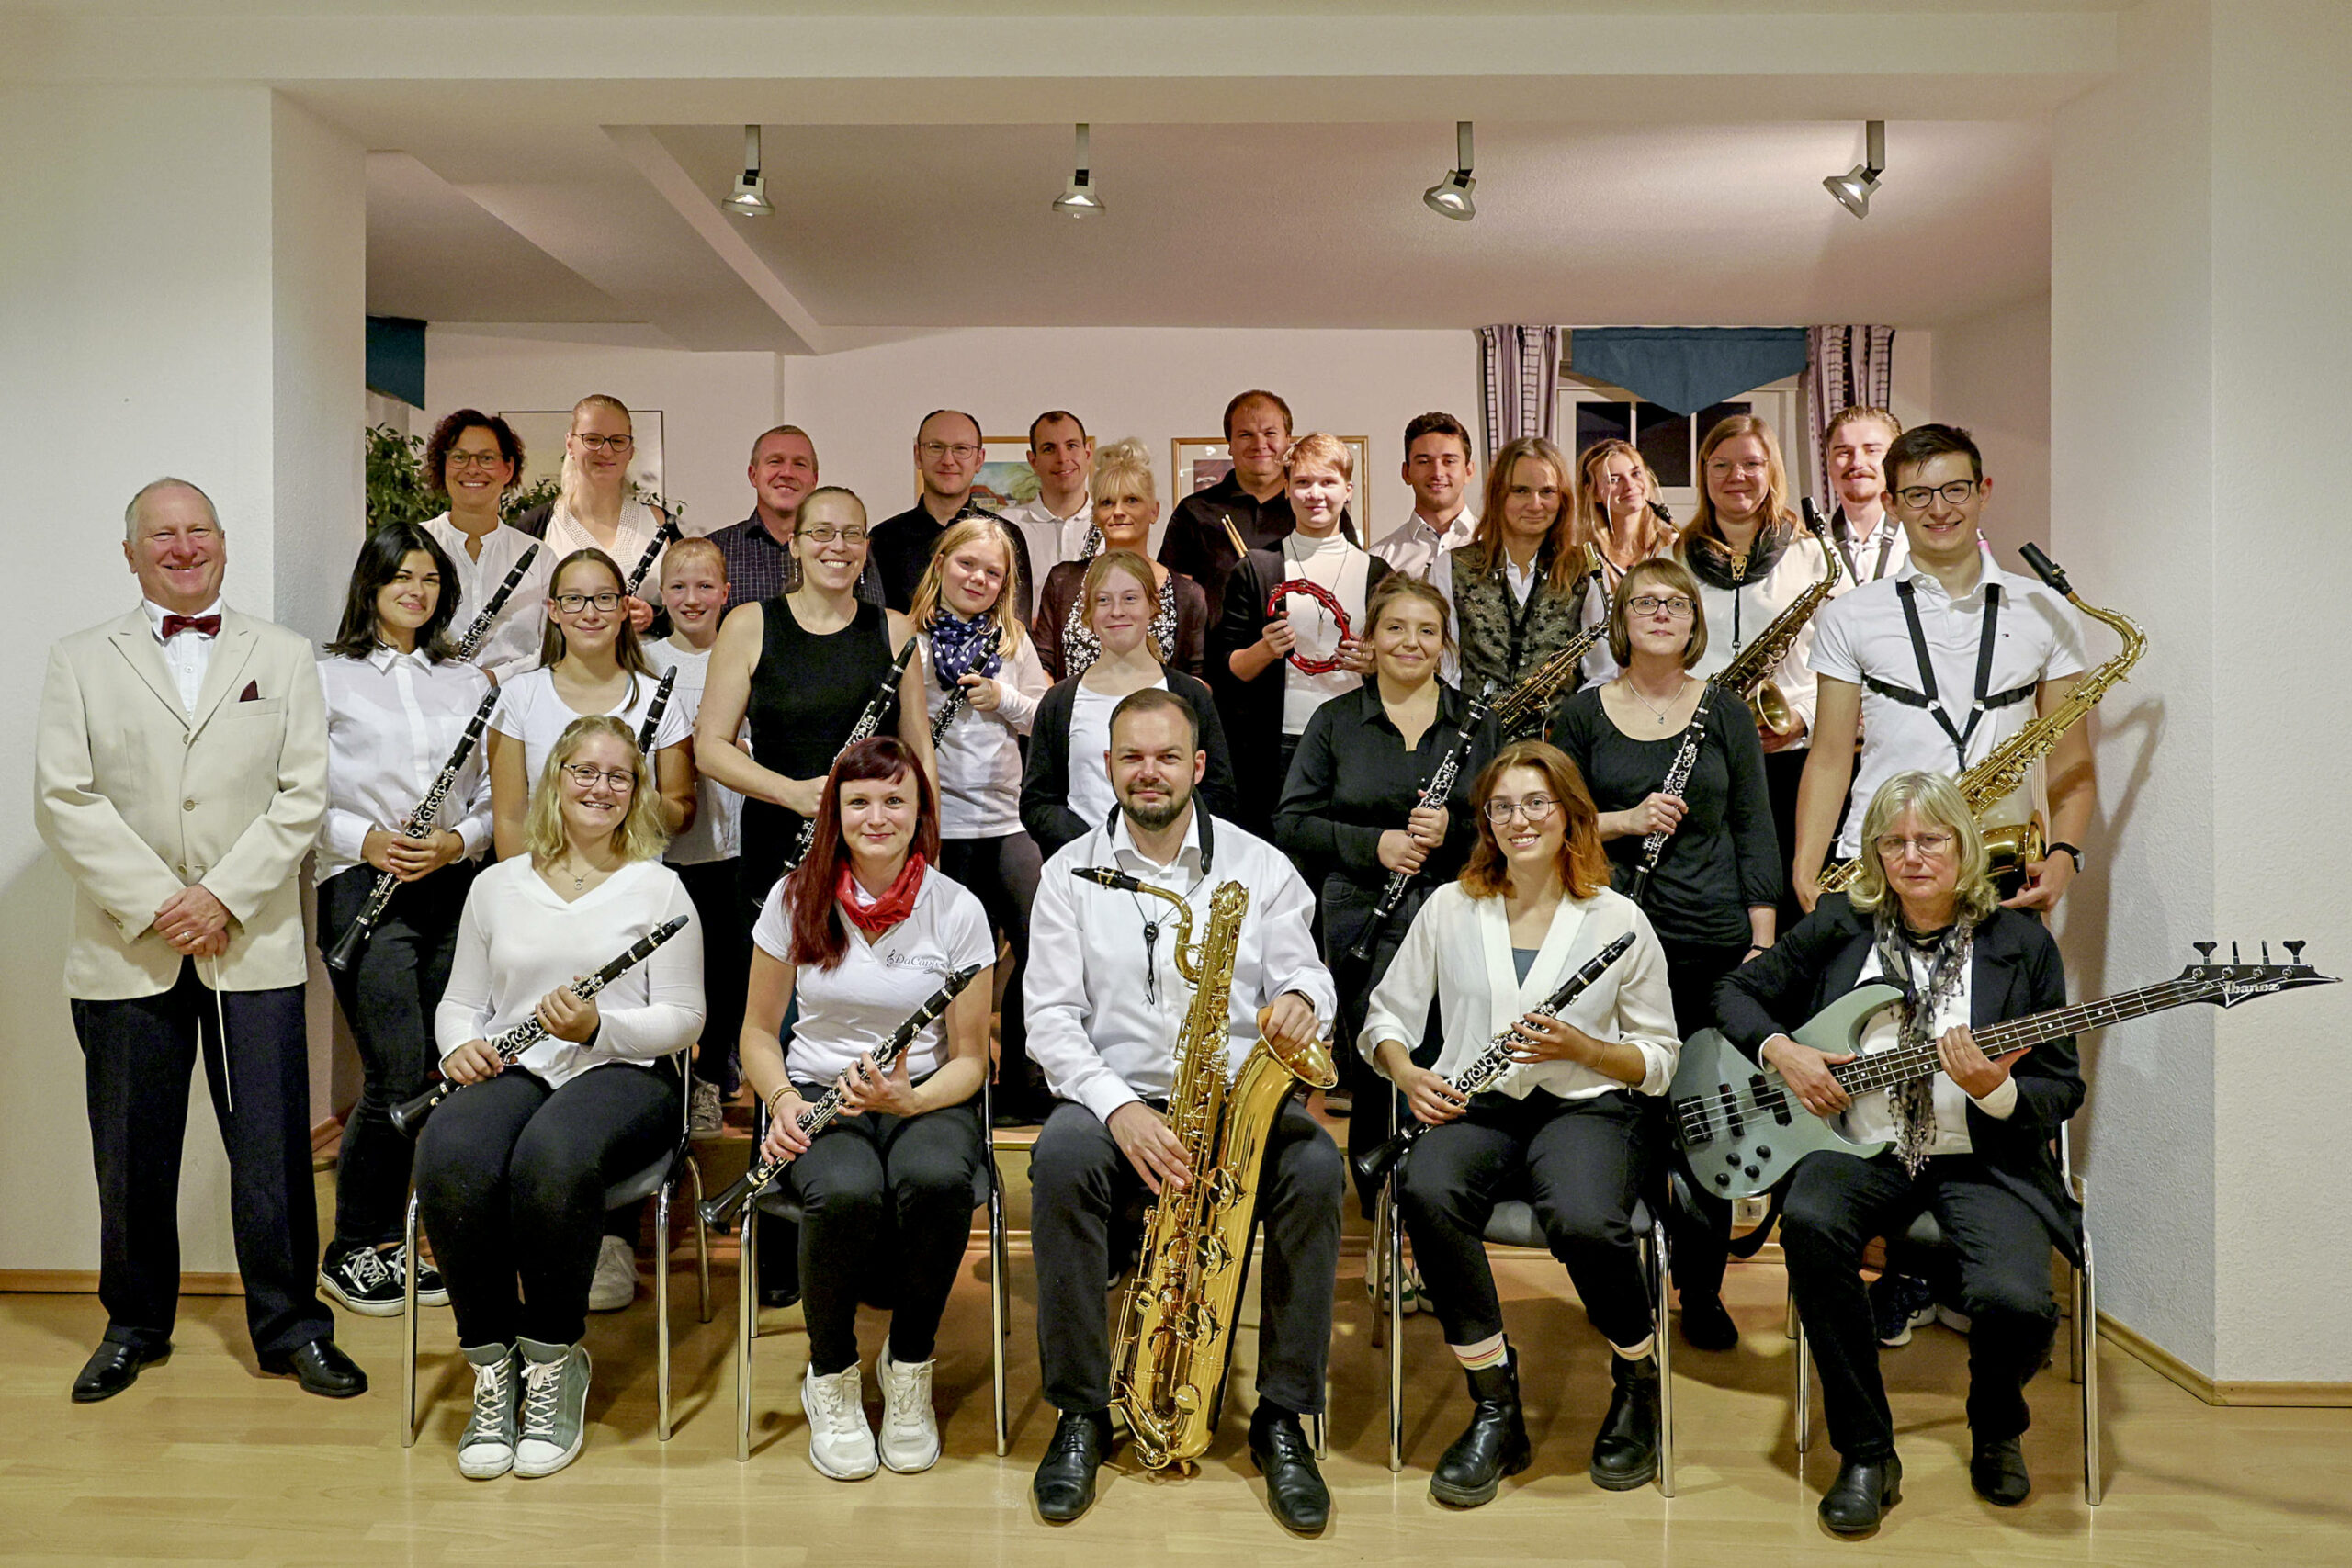 Musikschule Altenburger Land - Klarinettenorchester Da Capo